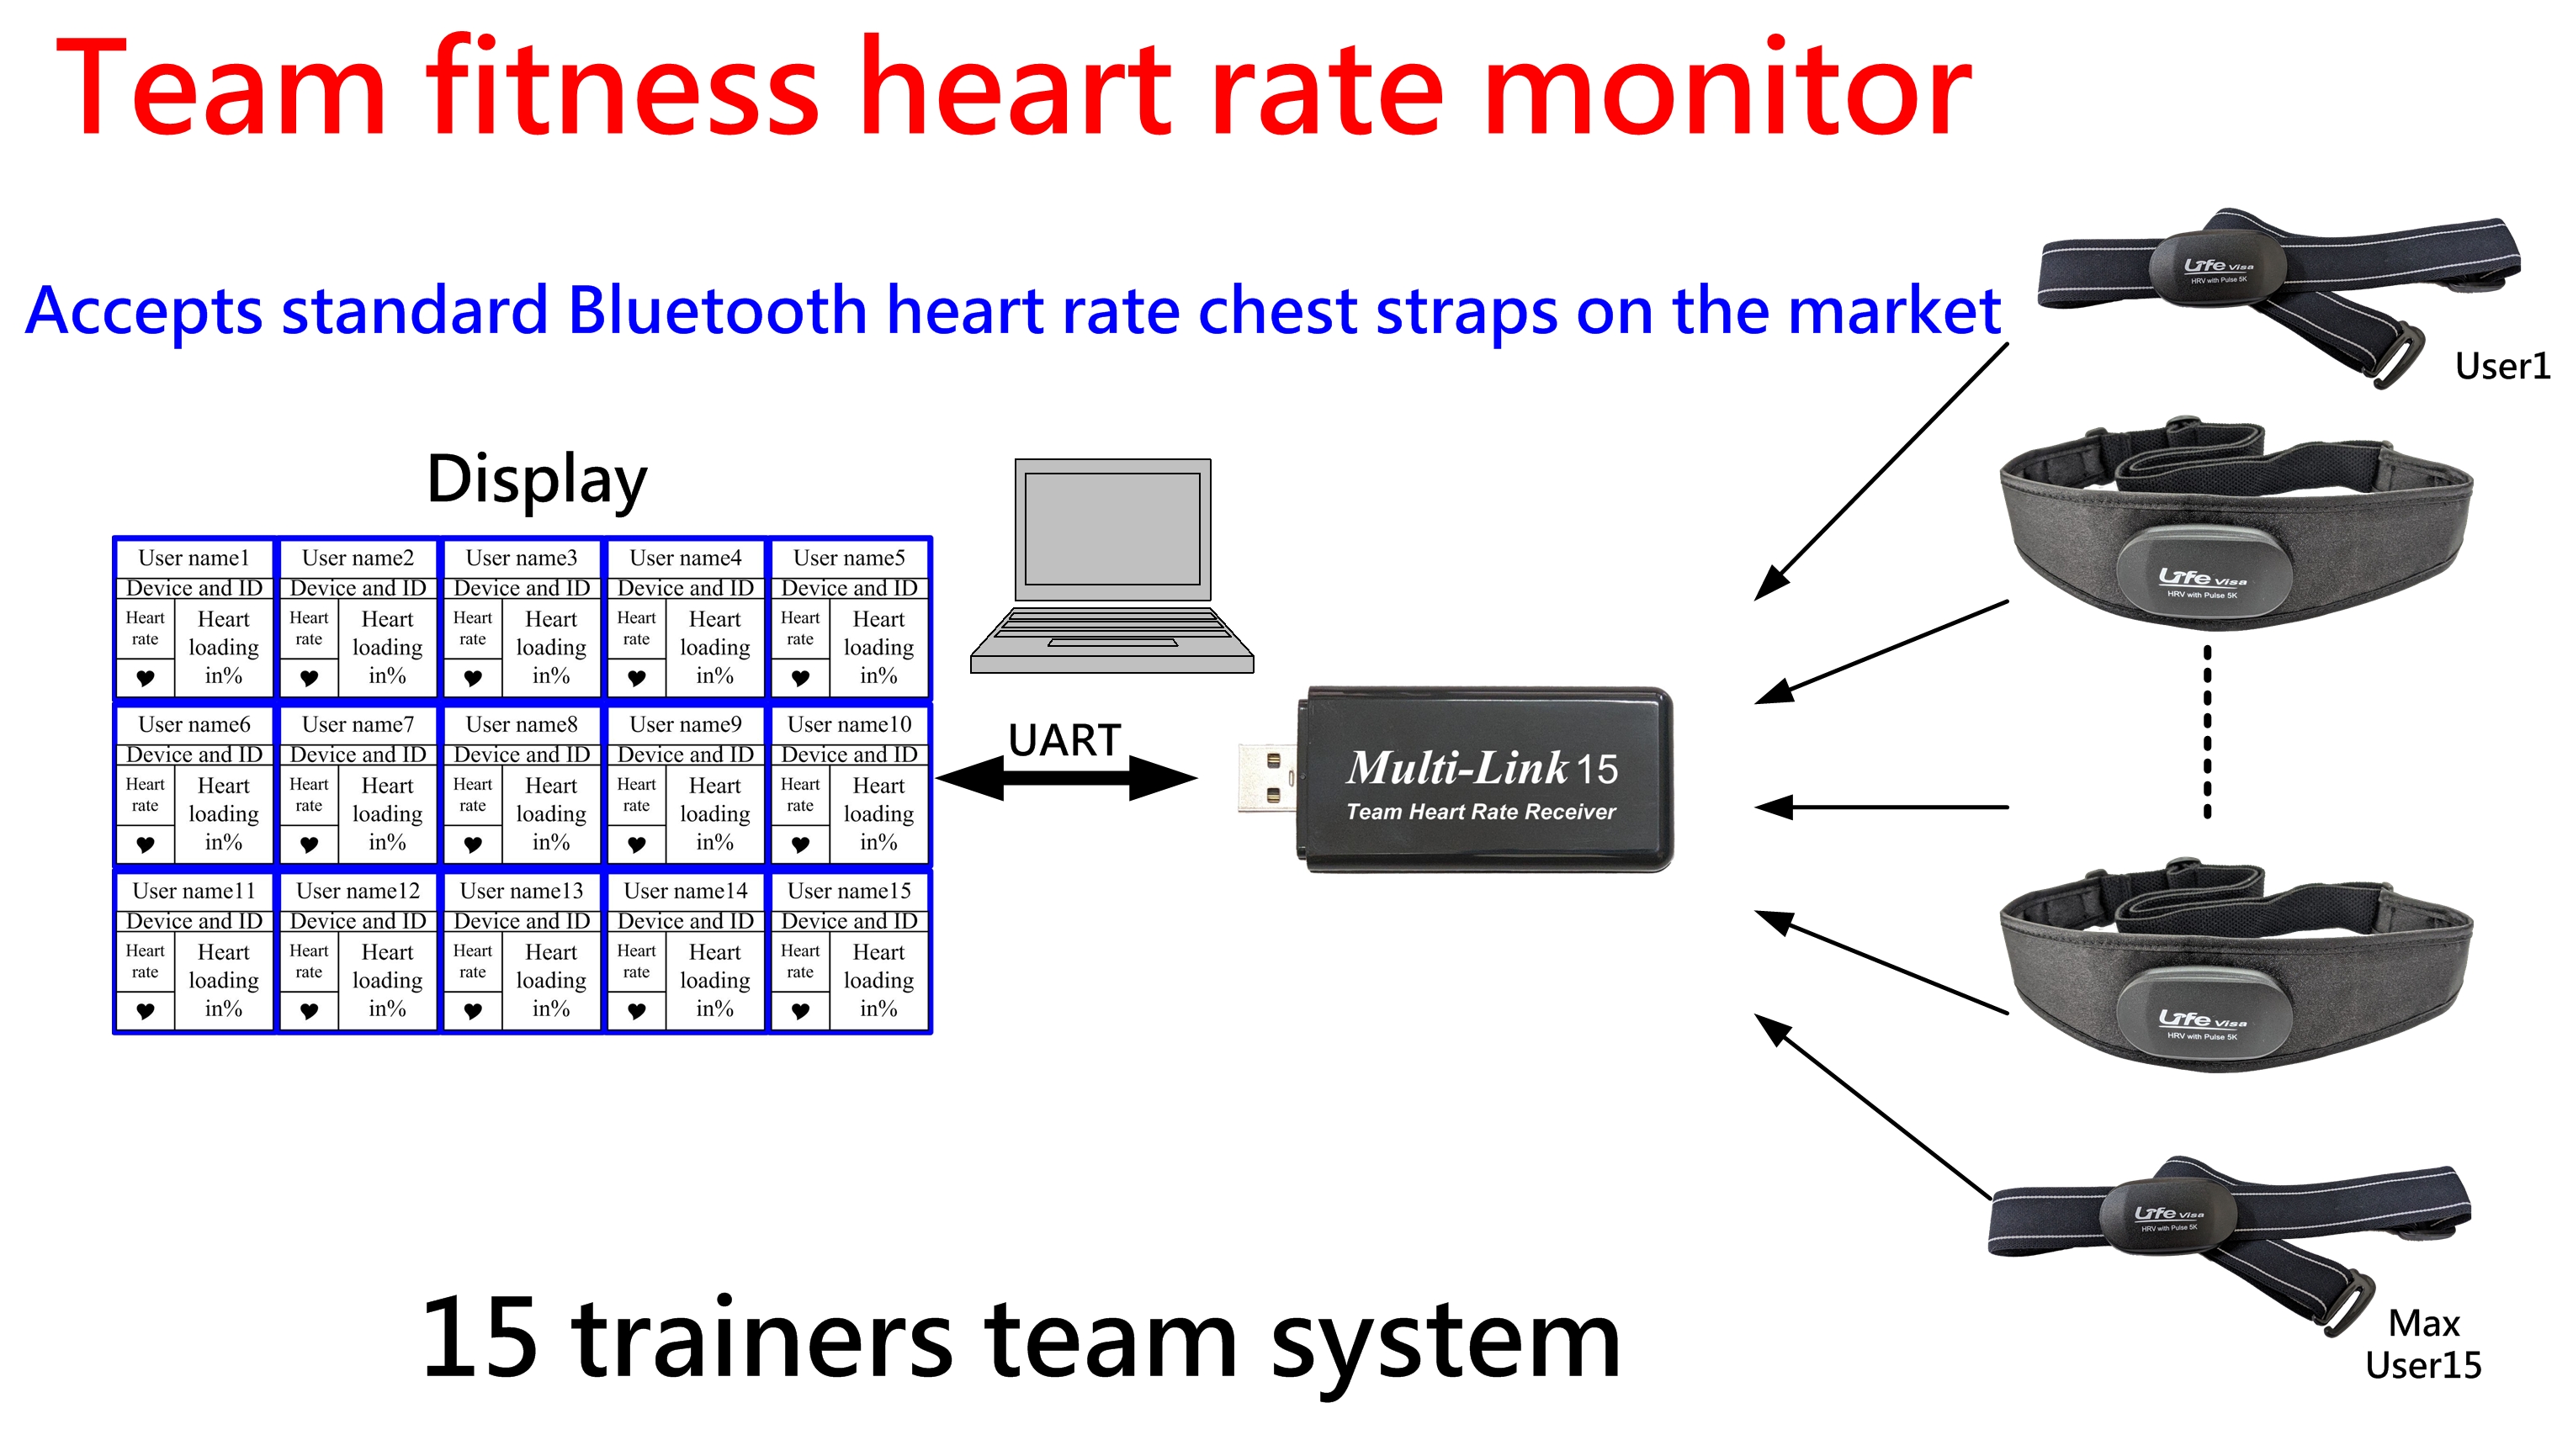 Bluetooth 15 trainers team training system